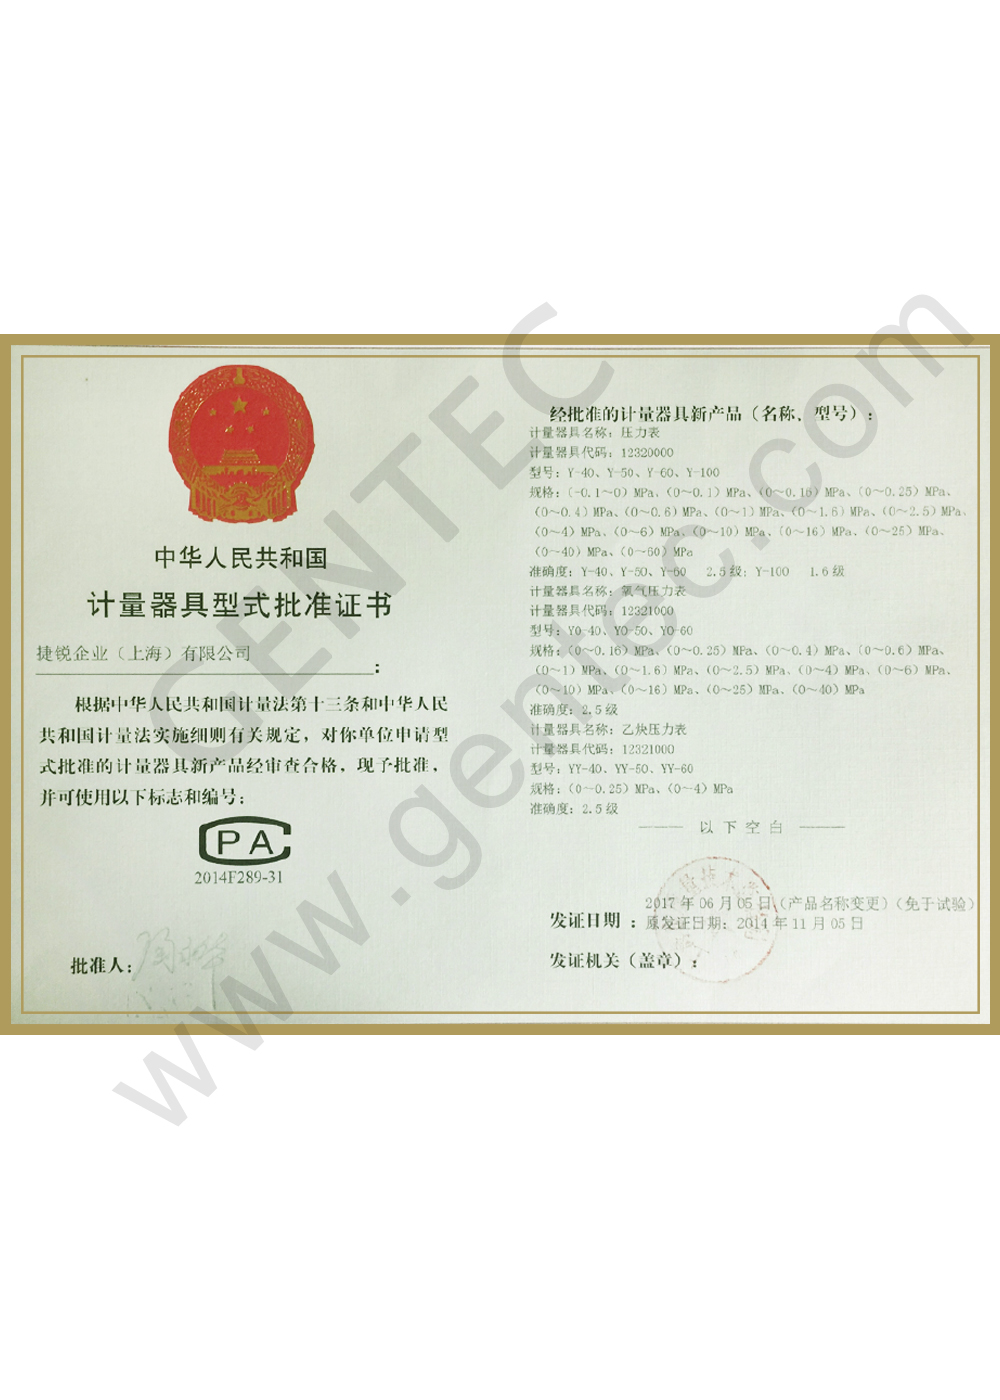 Approval Certificate (Gauges）